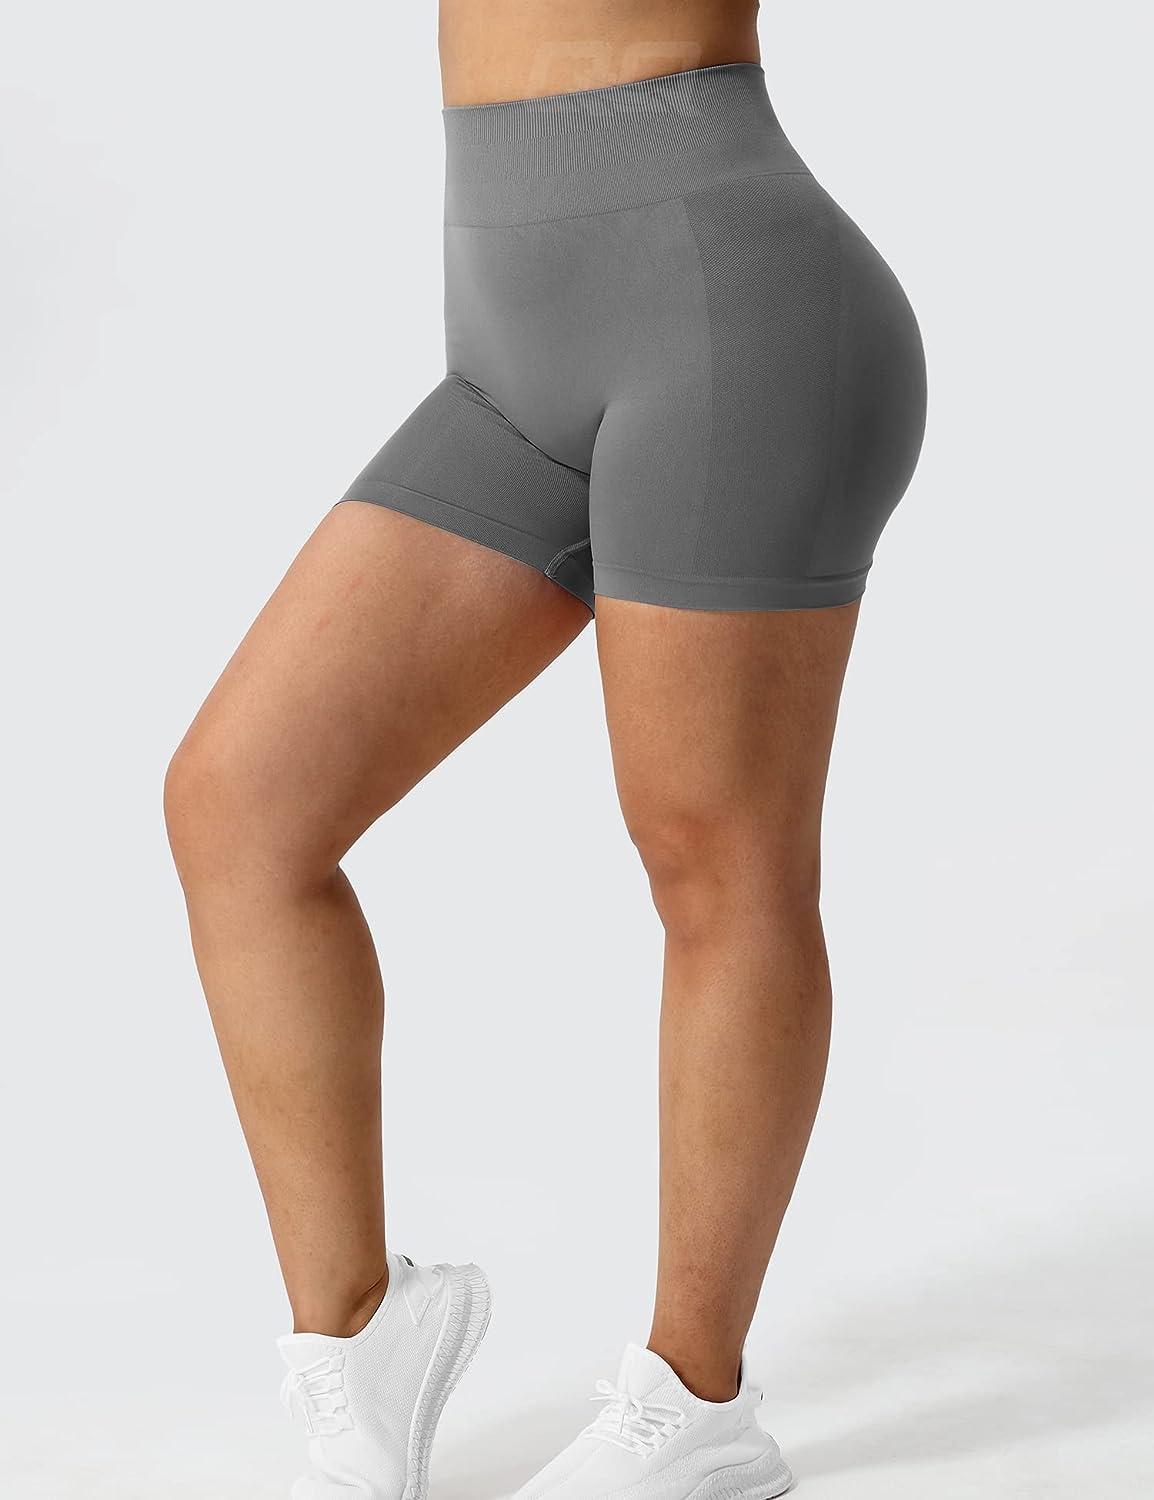 QOQ Women Seamless Scrunch Gym Workout Shorts High-Waisted Butt Lifting  Fitness Shorts #4 Solid Light Grey Large